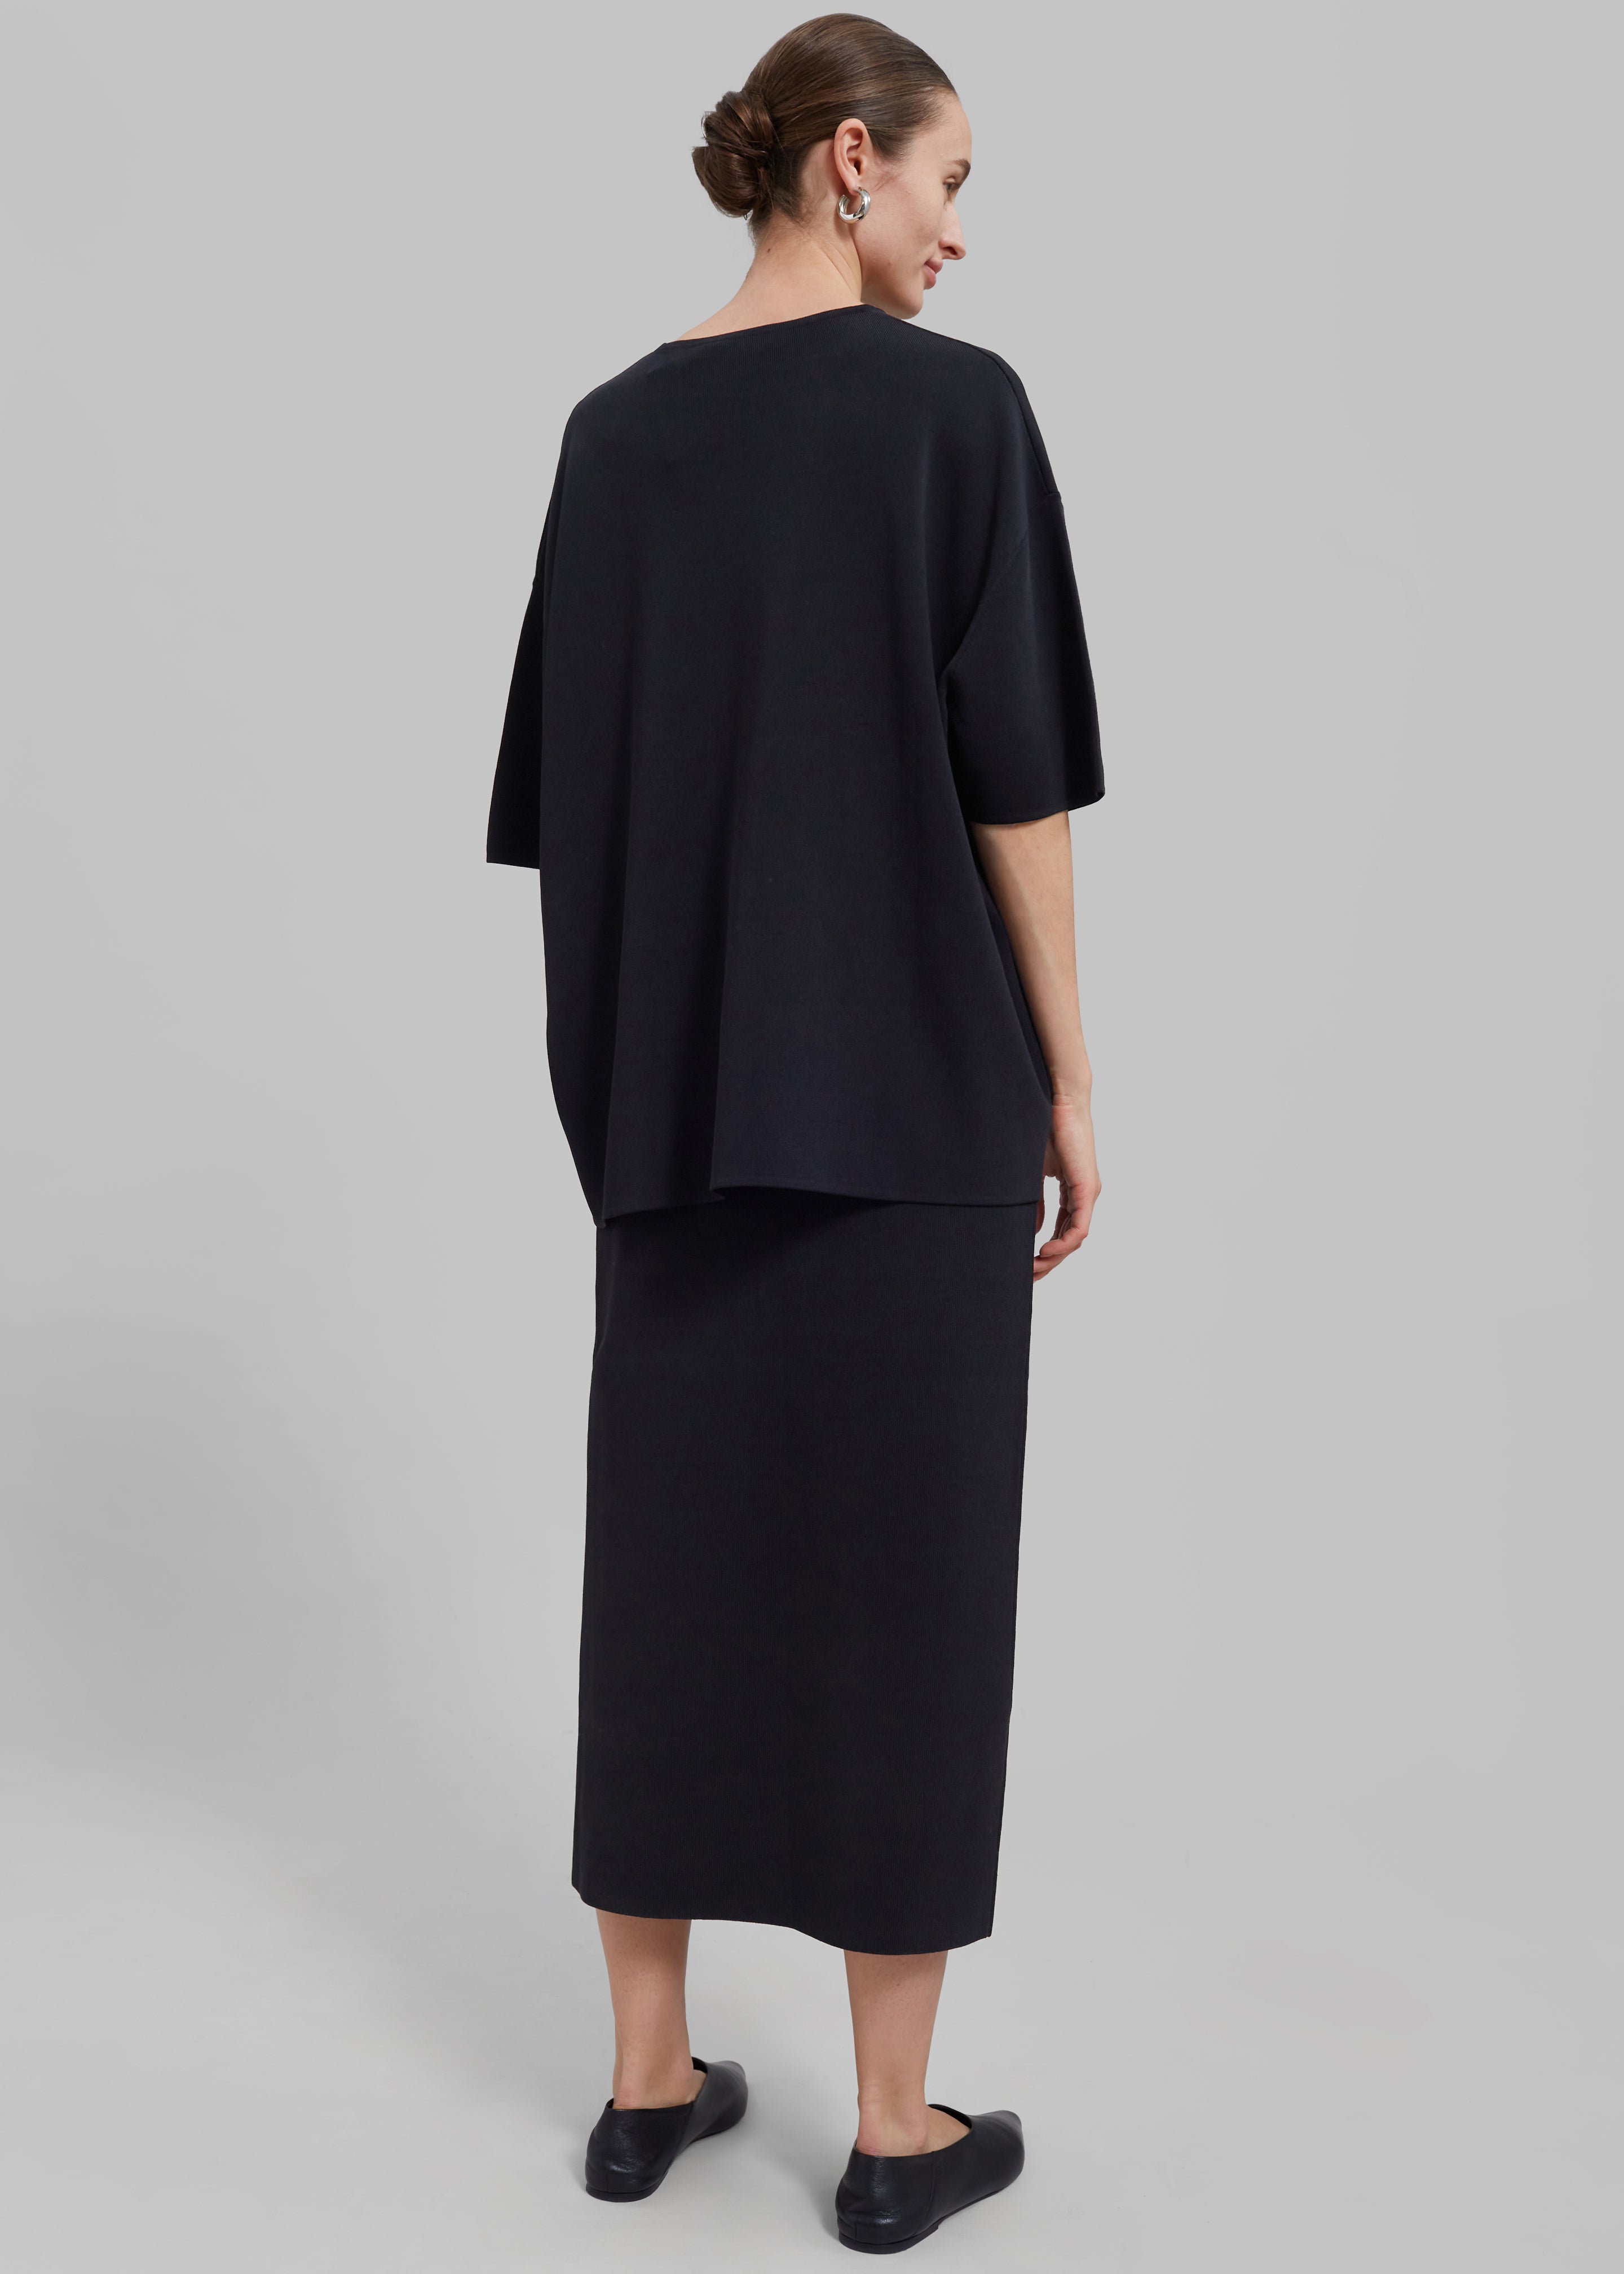 Solange Knit Pencil Skirt - Black - 10